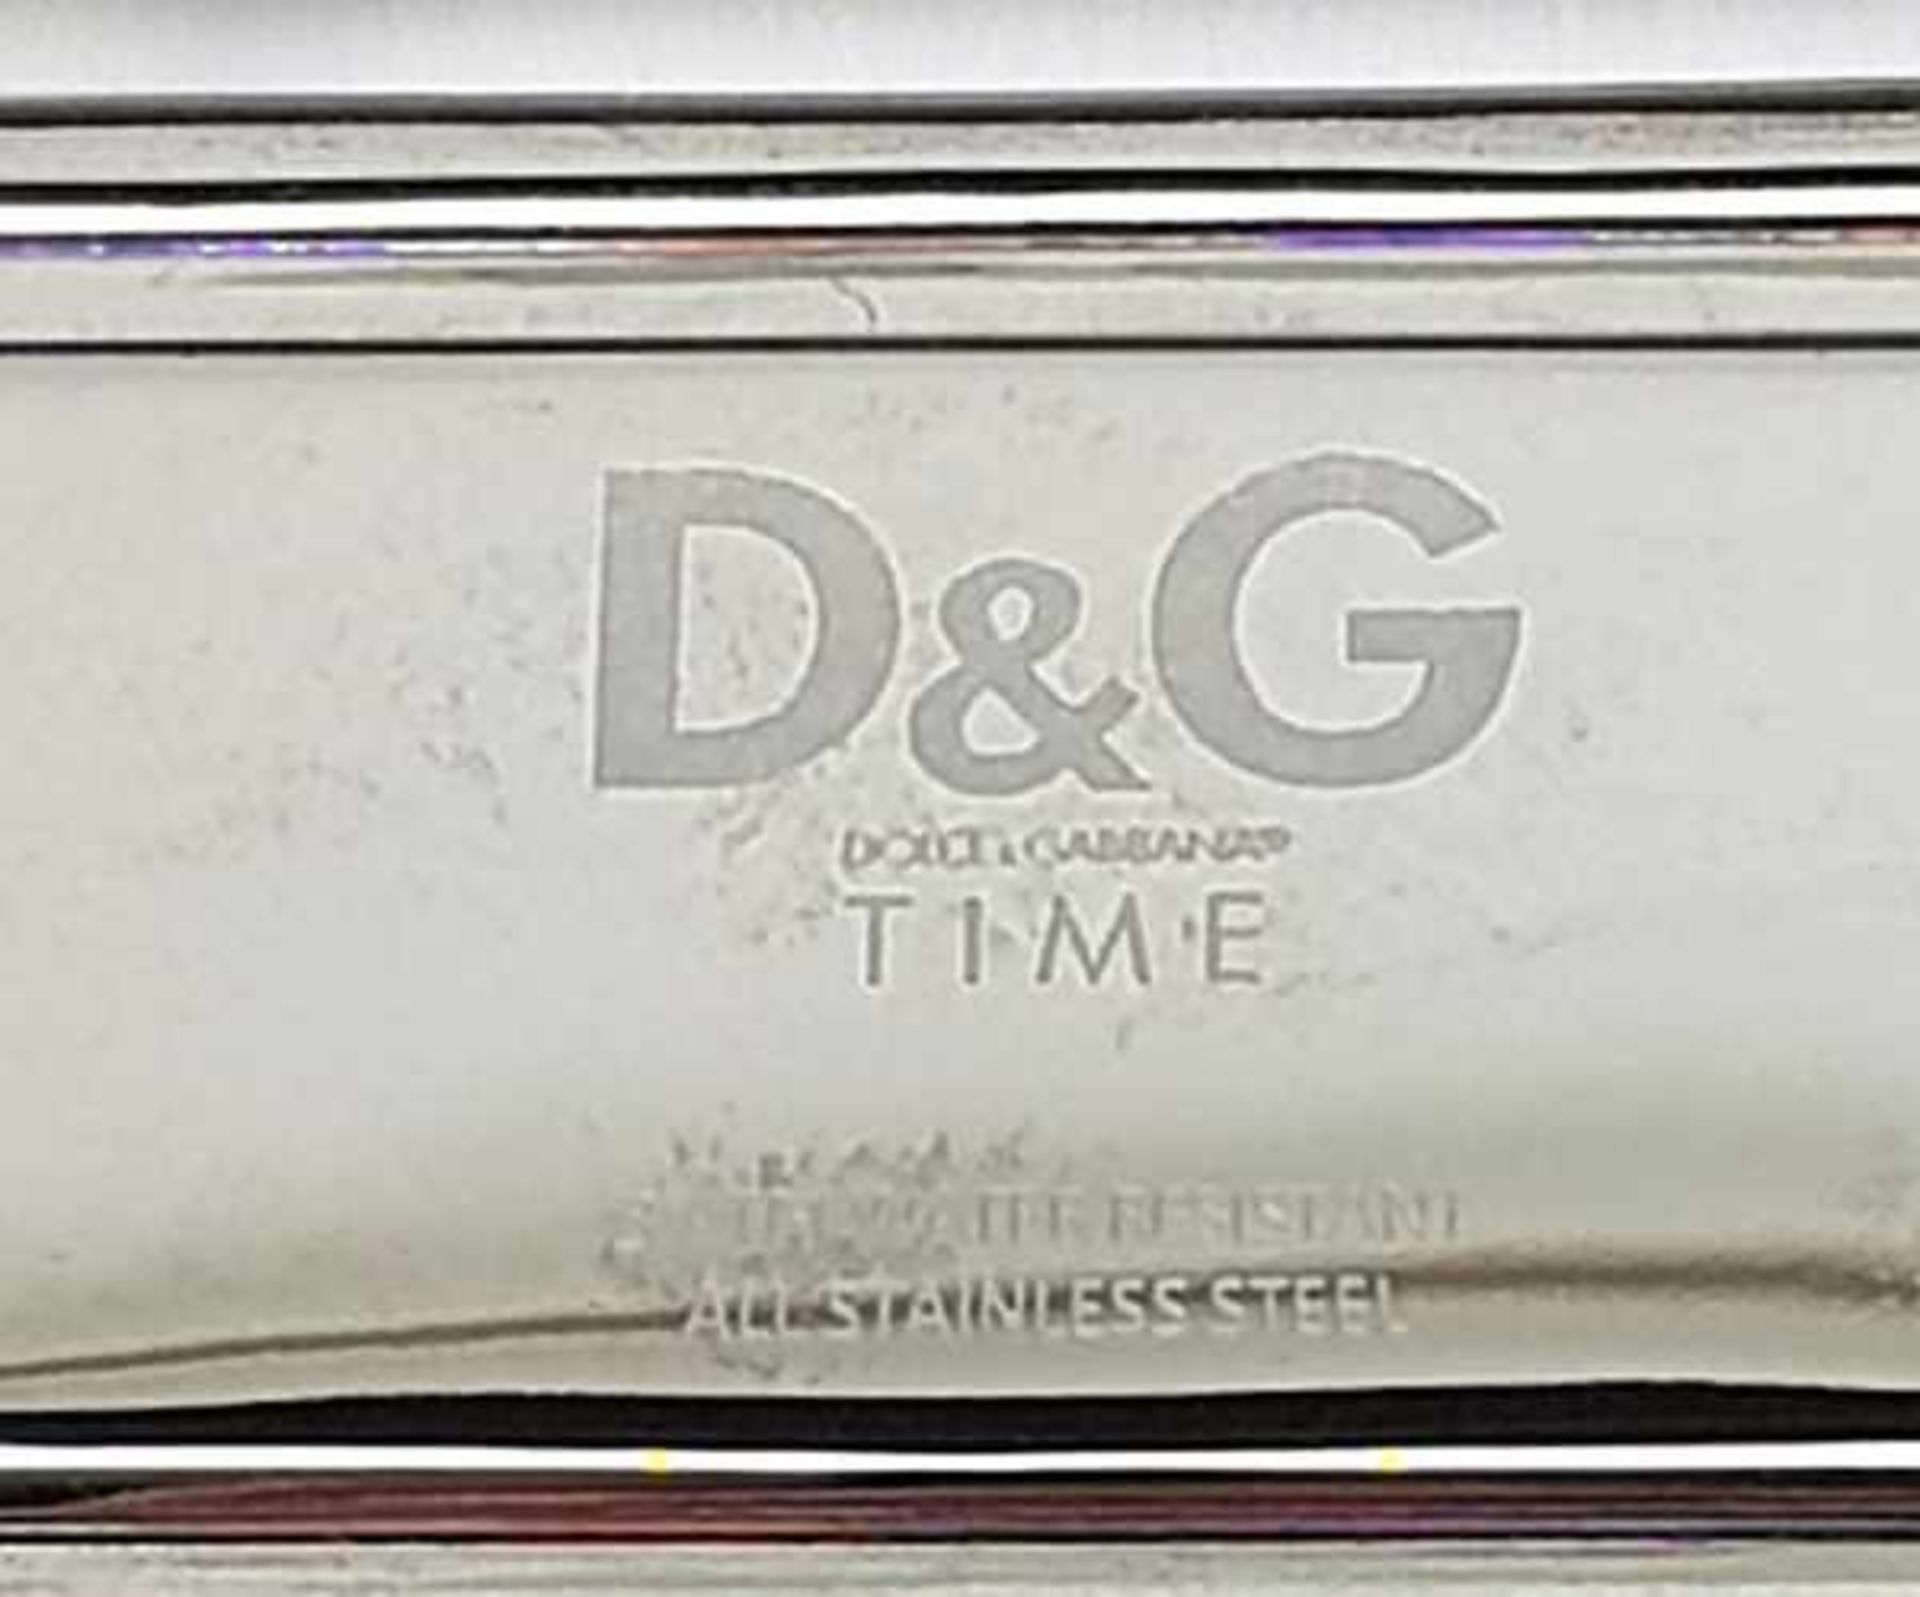 (Design) Dolce & Gabbana horlogeHorloge Dolce & Gabbana in orginele doos. Conditie: Verkleuring - Bild 6 aus 9